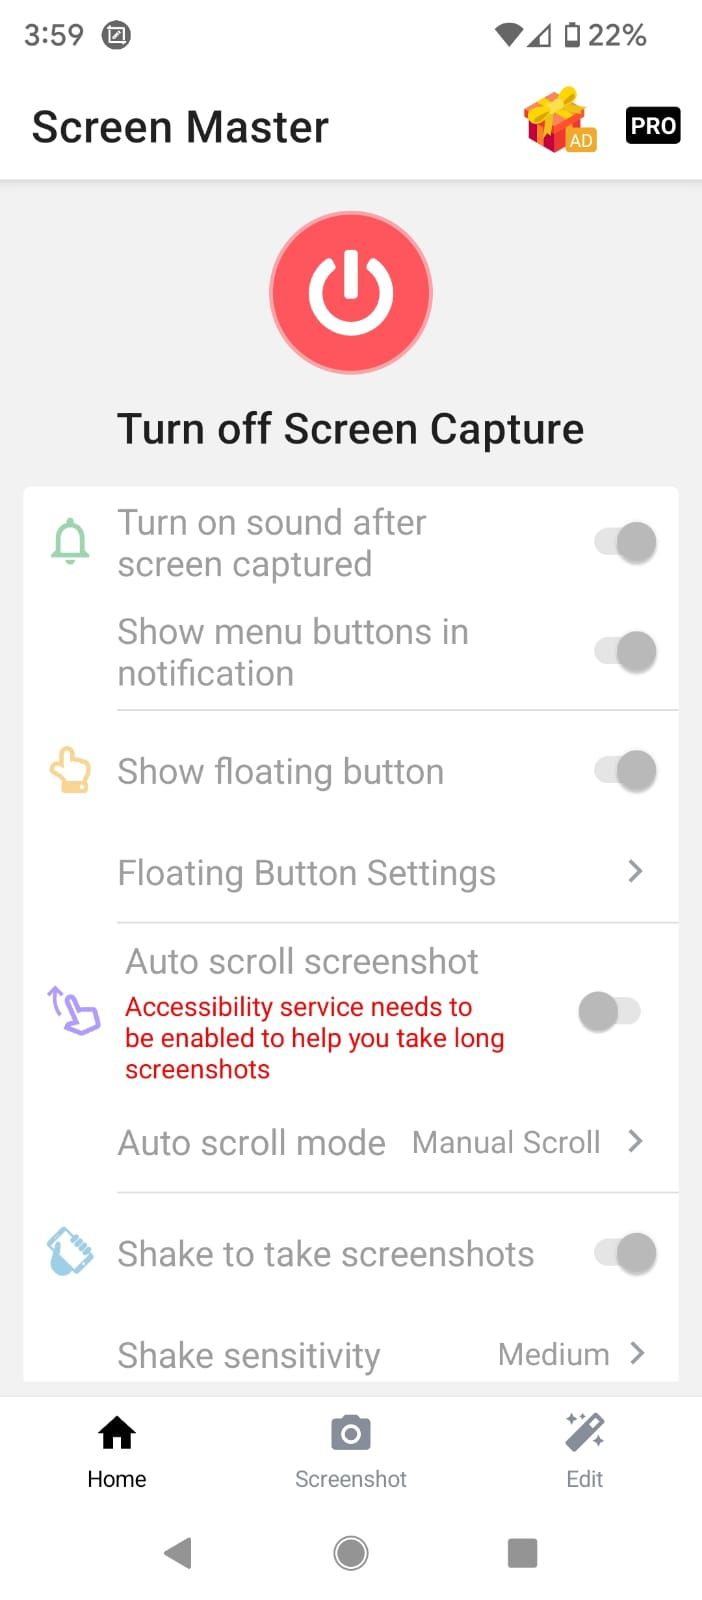 Main screen and settings in ScreenMaster